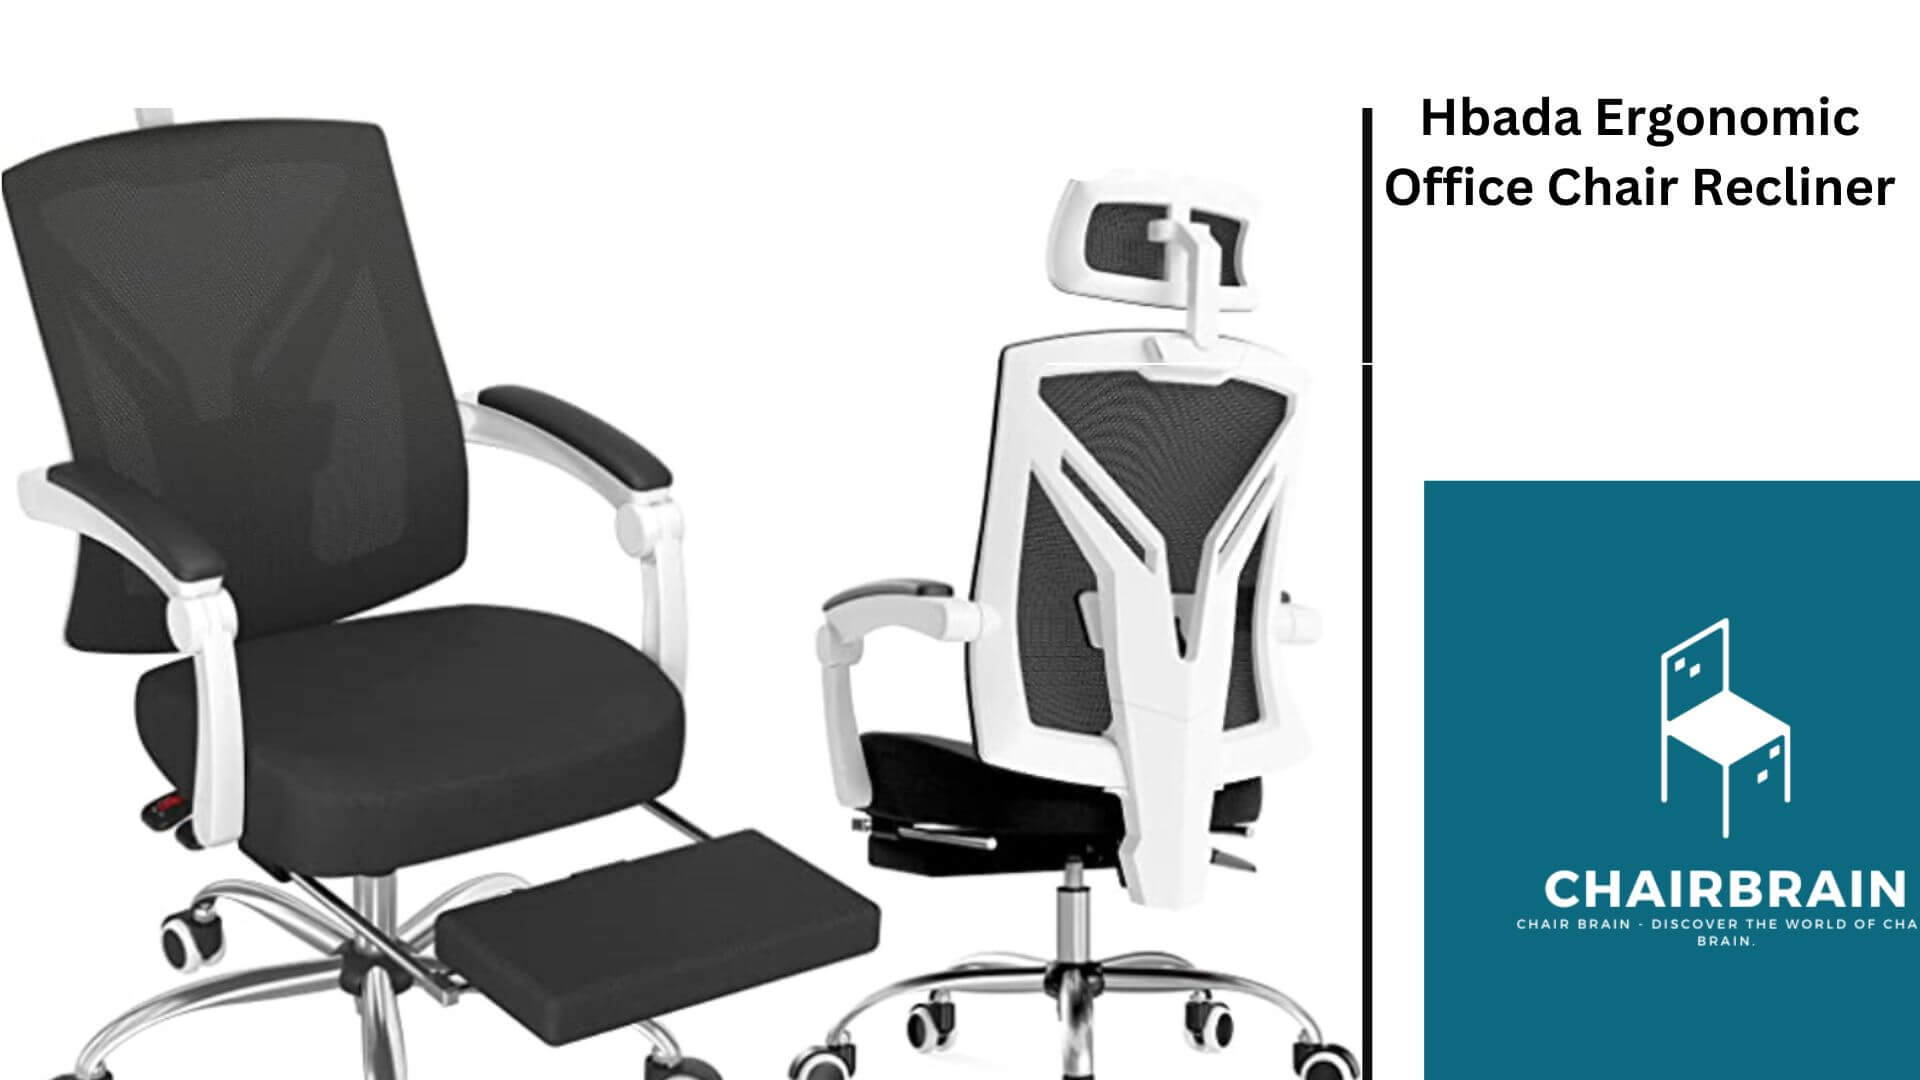 Hbada Ergonomic Office Recliner Chair REVIEW